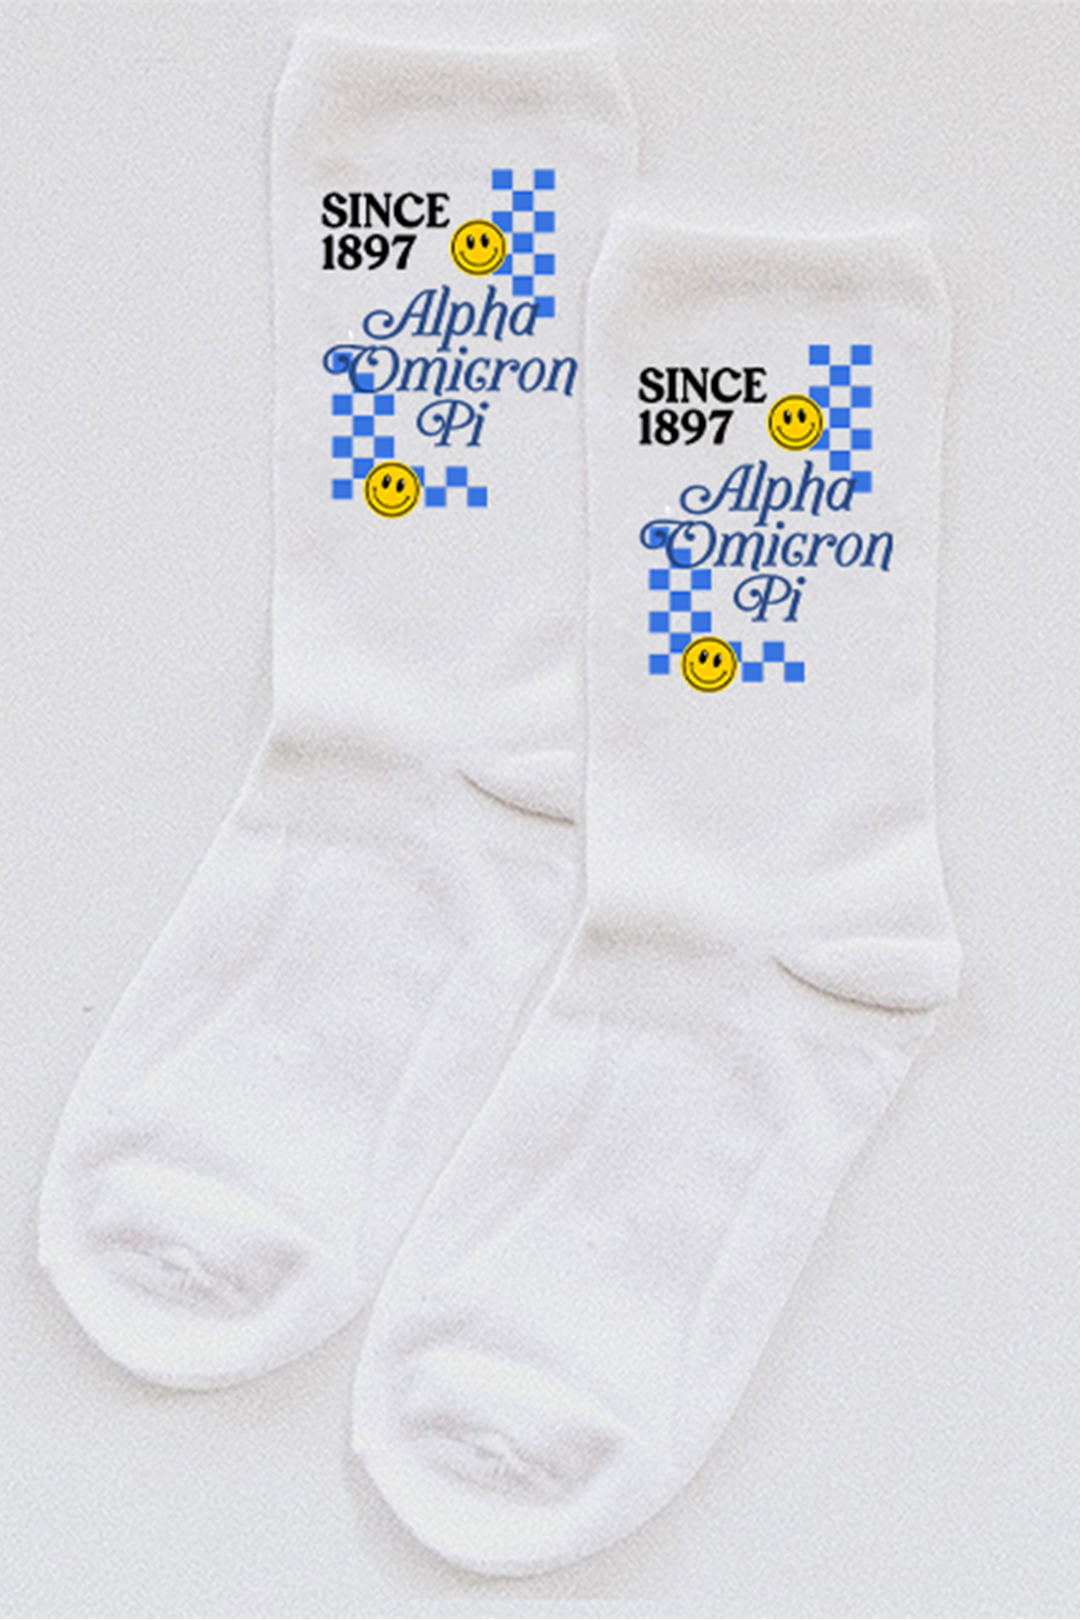 Blue Checkered socks - Alpha Omicron Pi